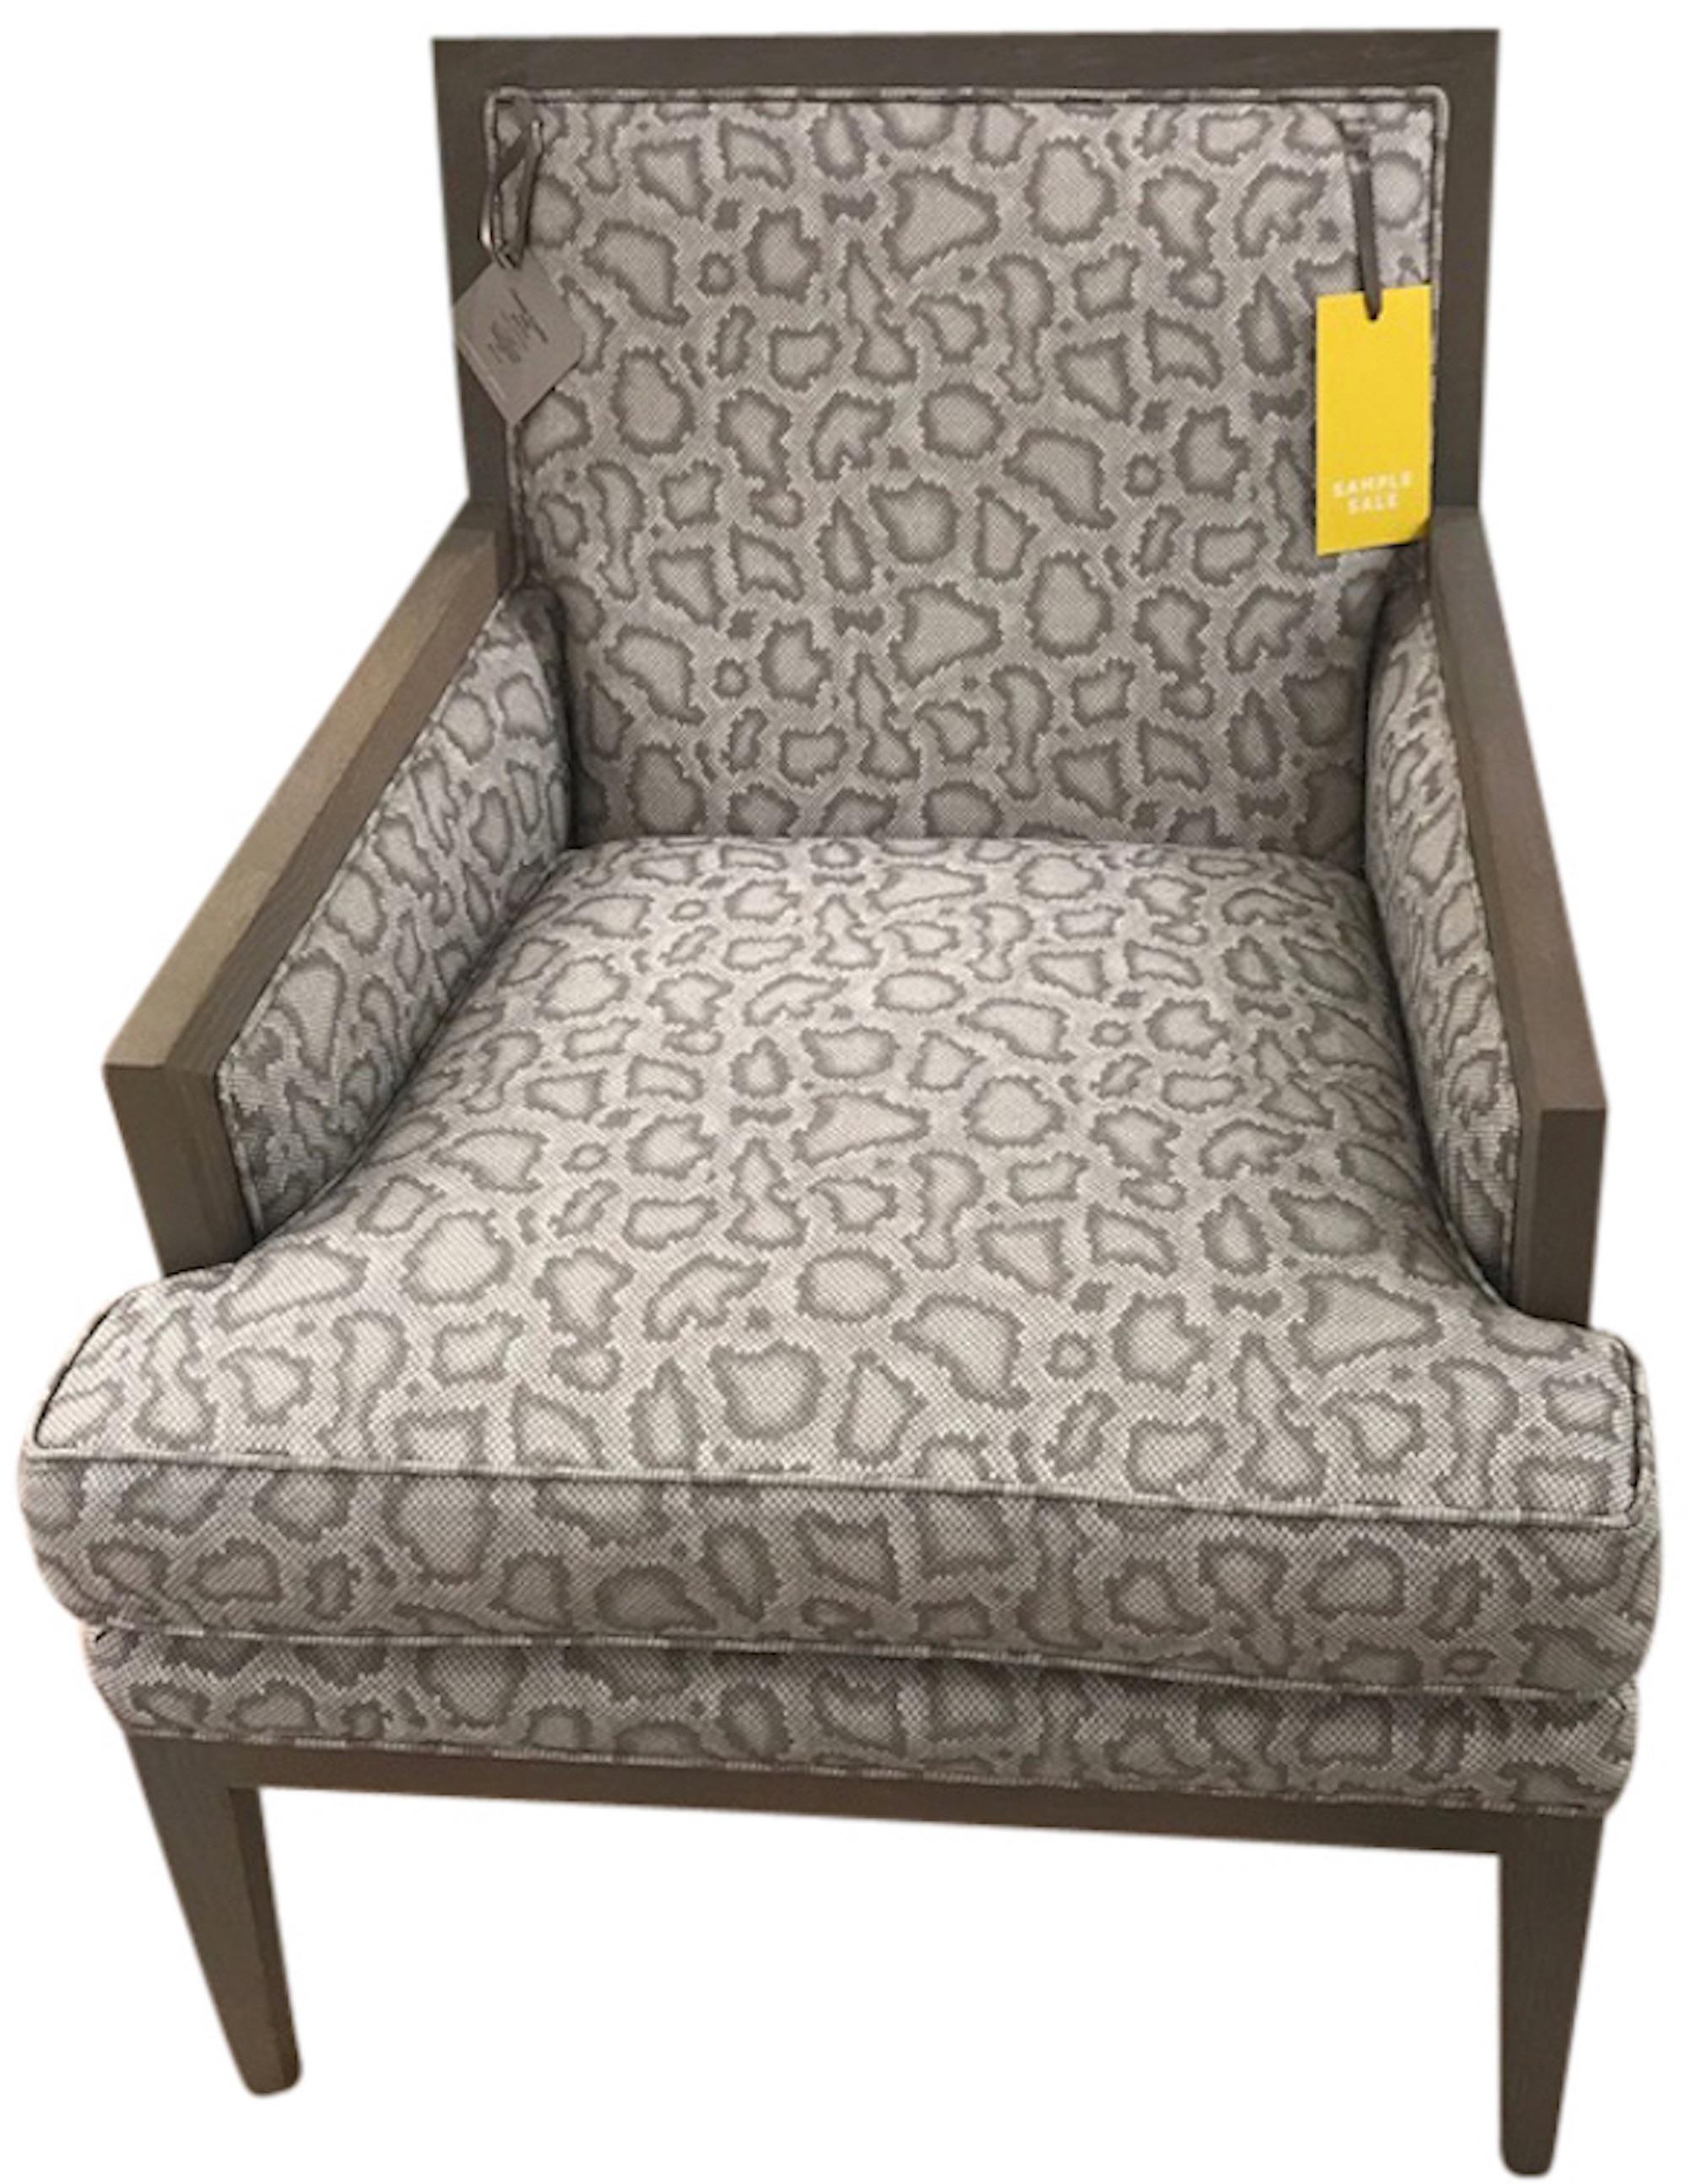 Modern Schumacher Chanaux Armchair Upholstered in Park Avenue Python Fabric- Sample